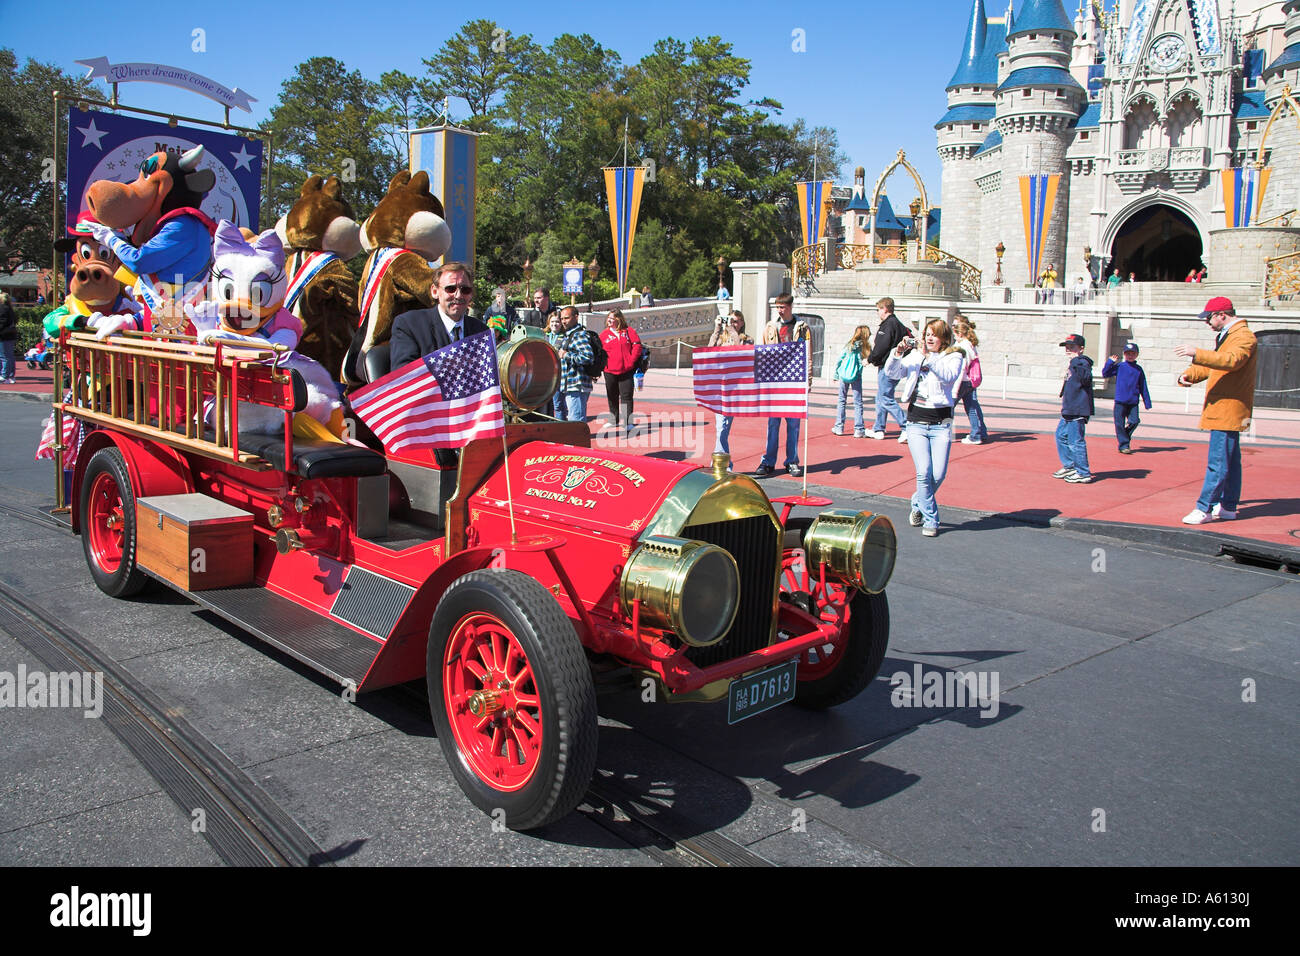 Fire tender and Disney characters, Disney Dreams Come True Parade, Magic Kingdom, Disney World, Orlando, Florida, USA Stock Photo